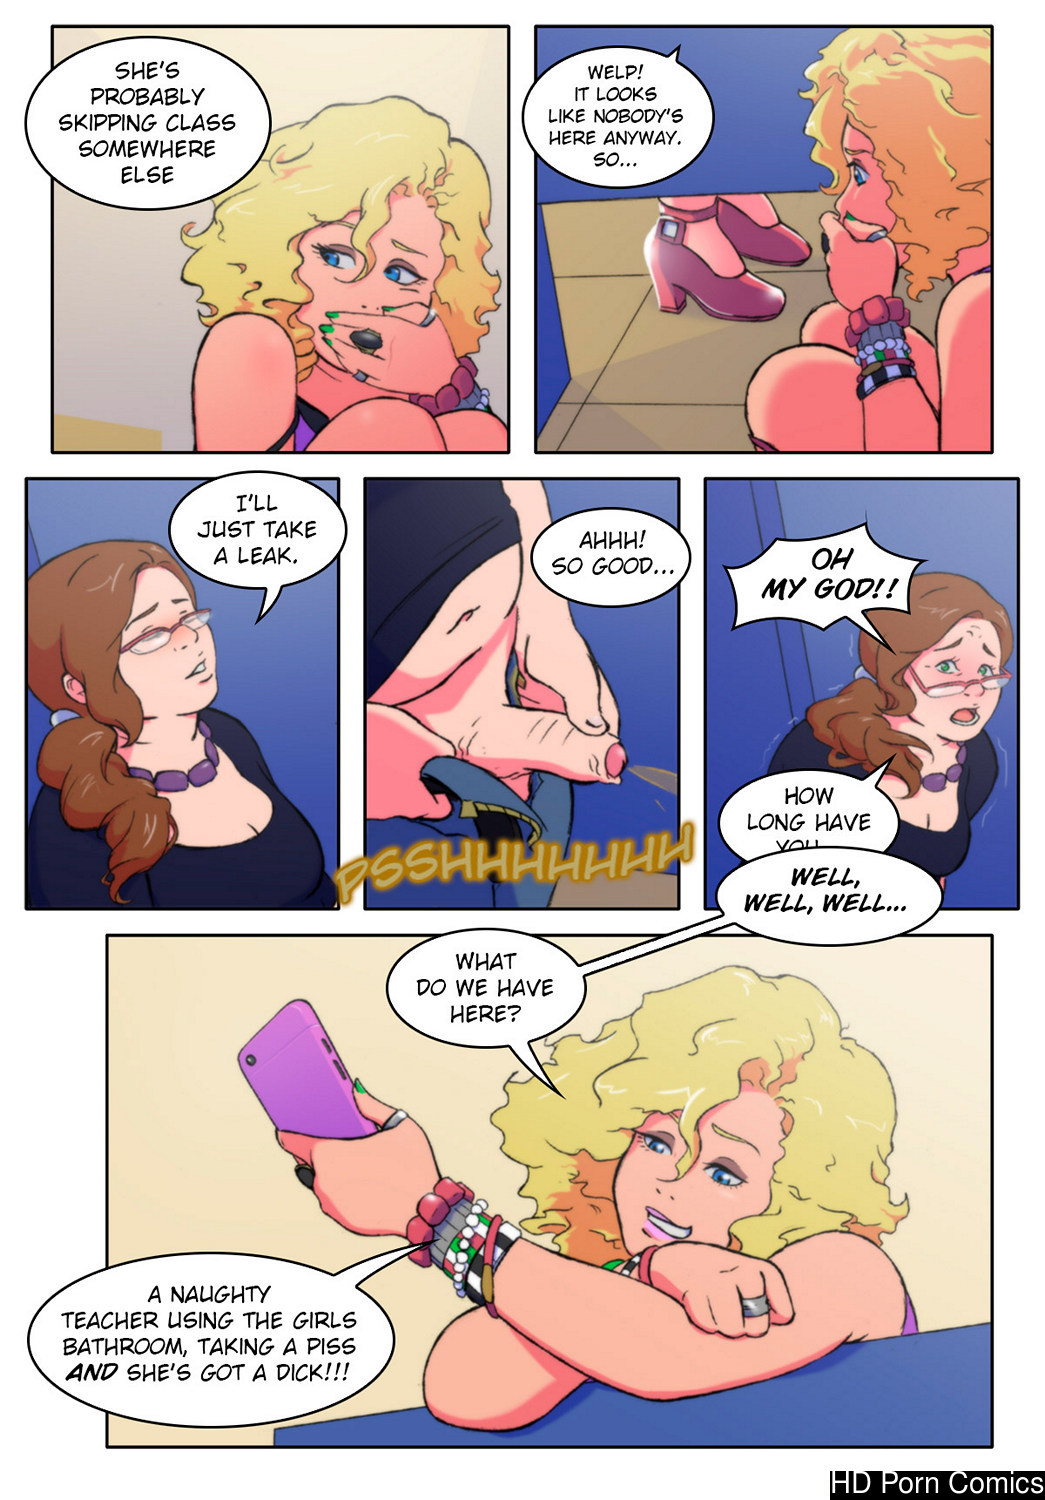 Girls Bathroom comic porn â€“ HD Porn Comics